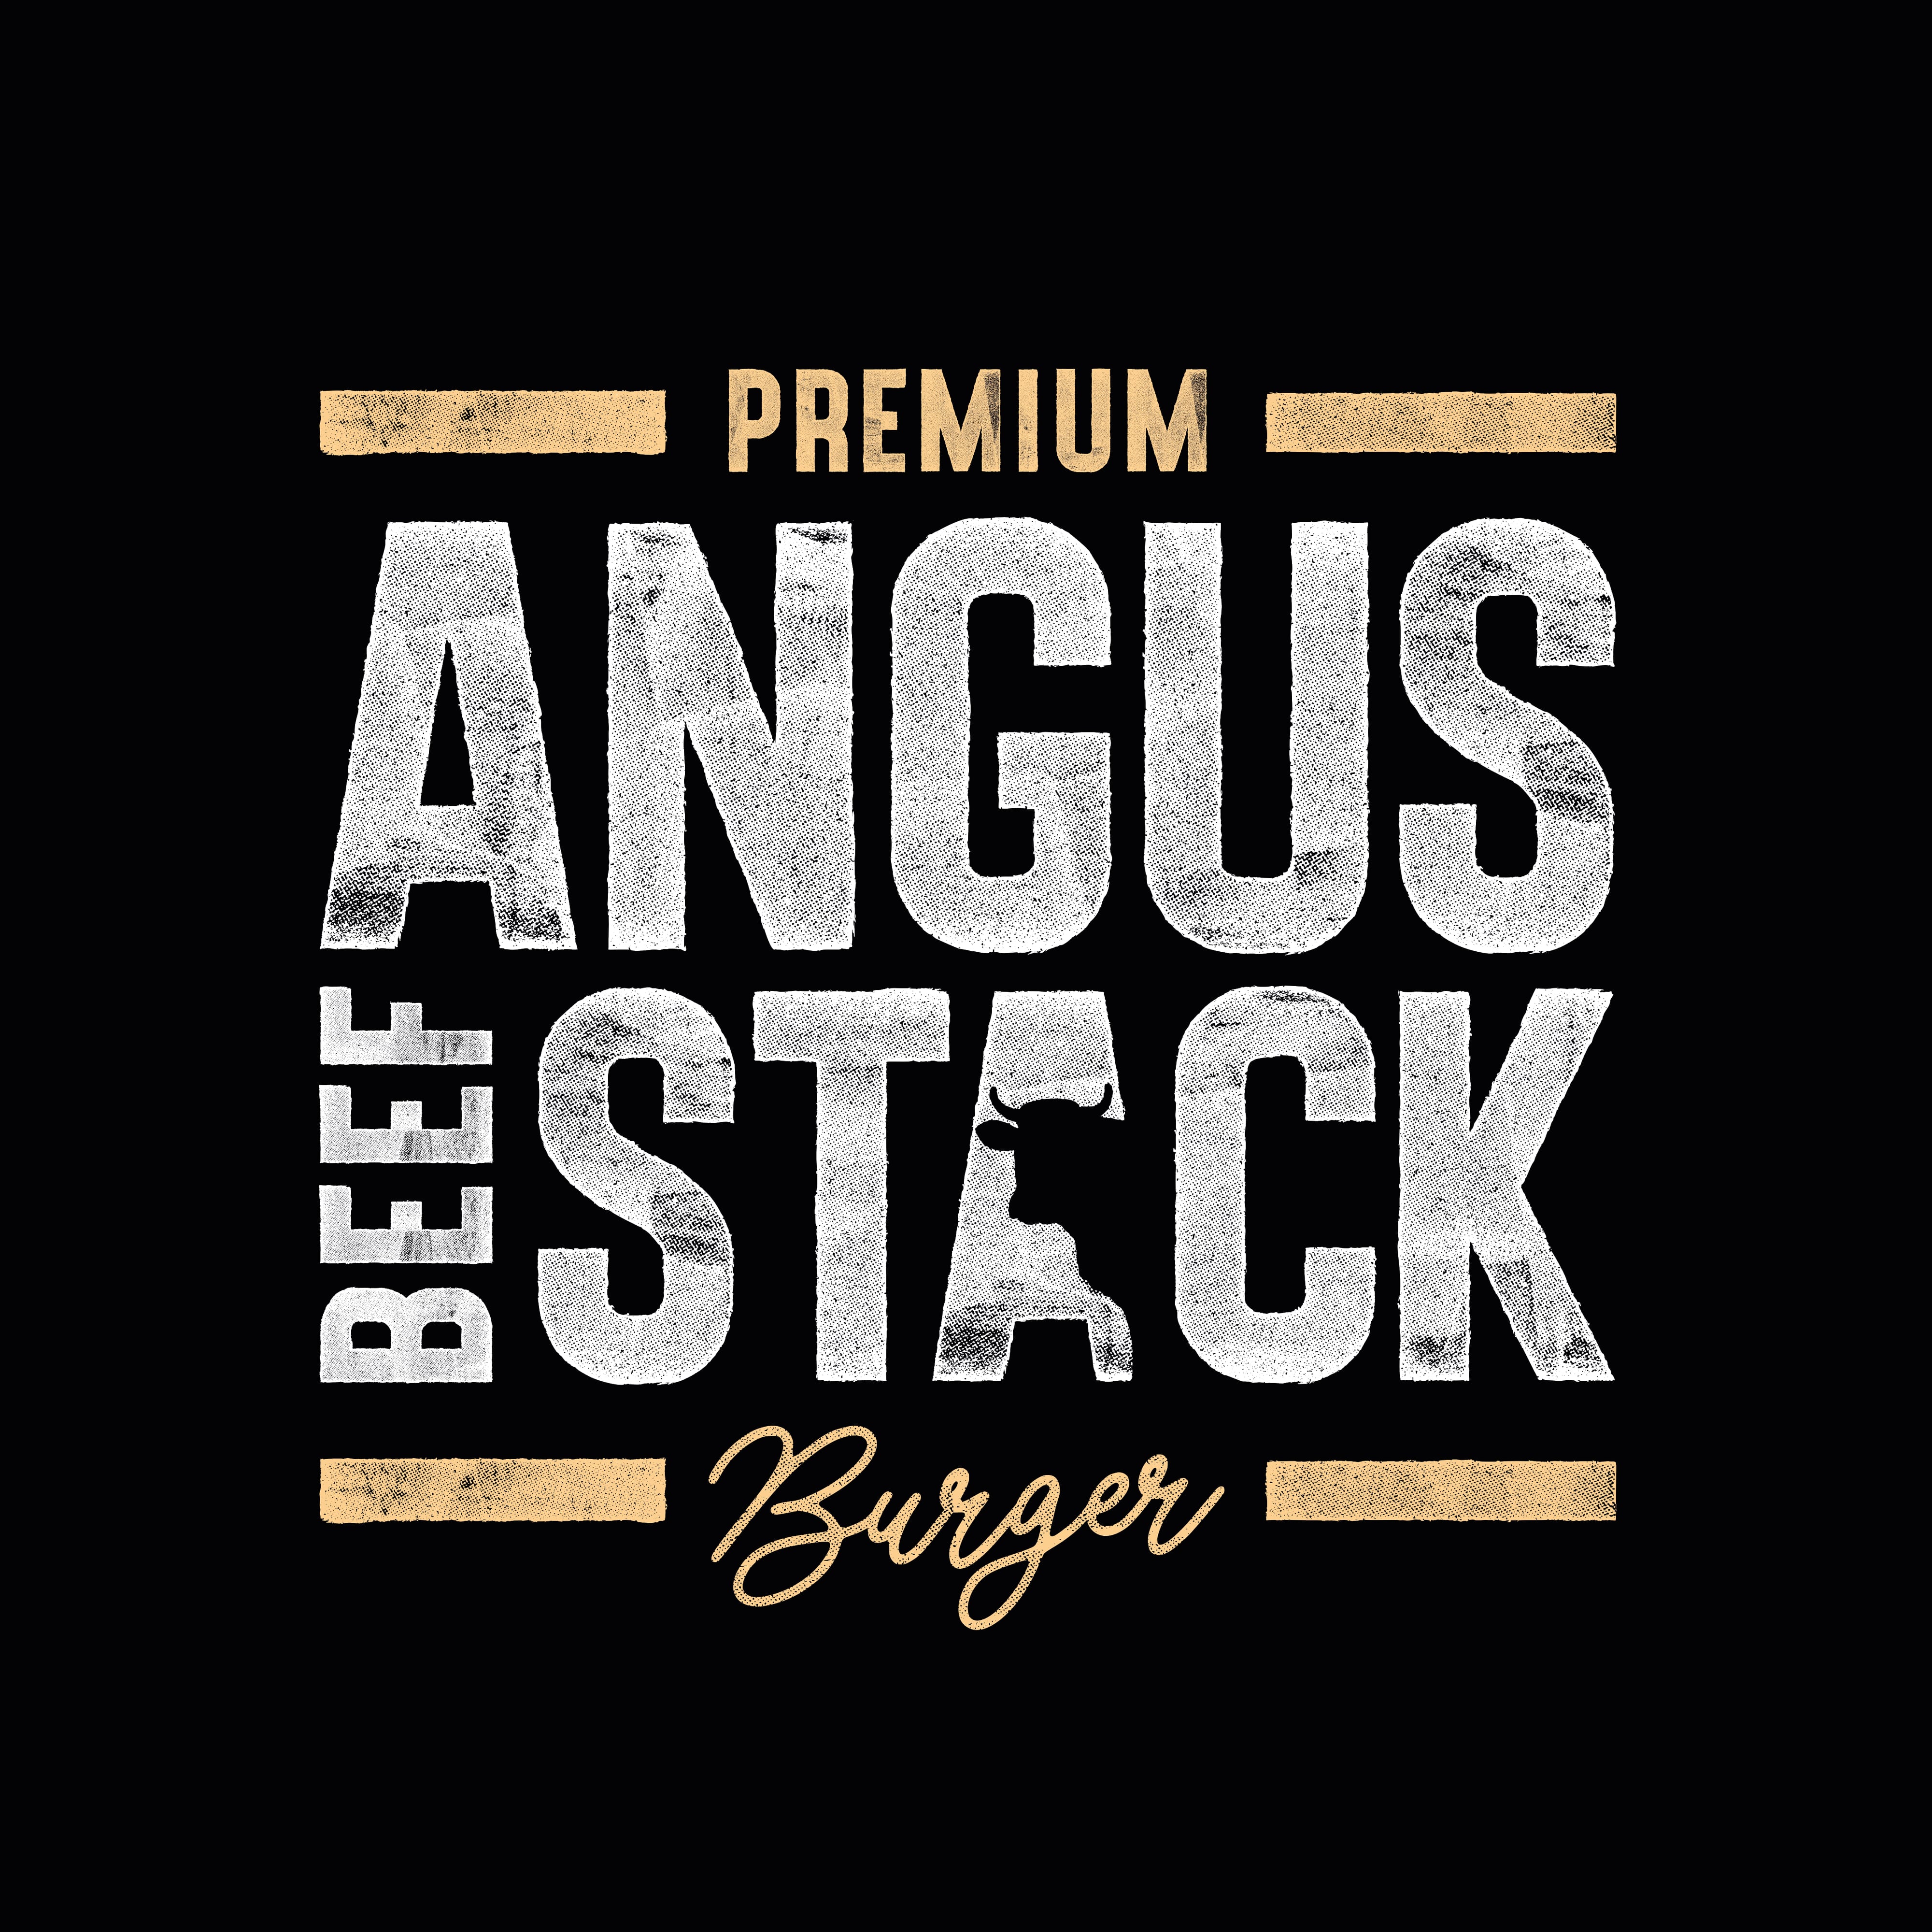 burger and sauce angus beef stack burger logo design